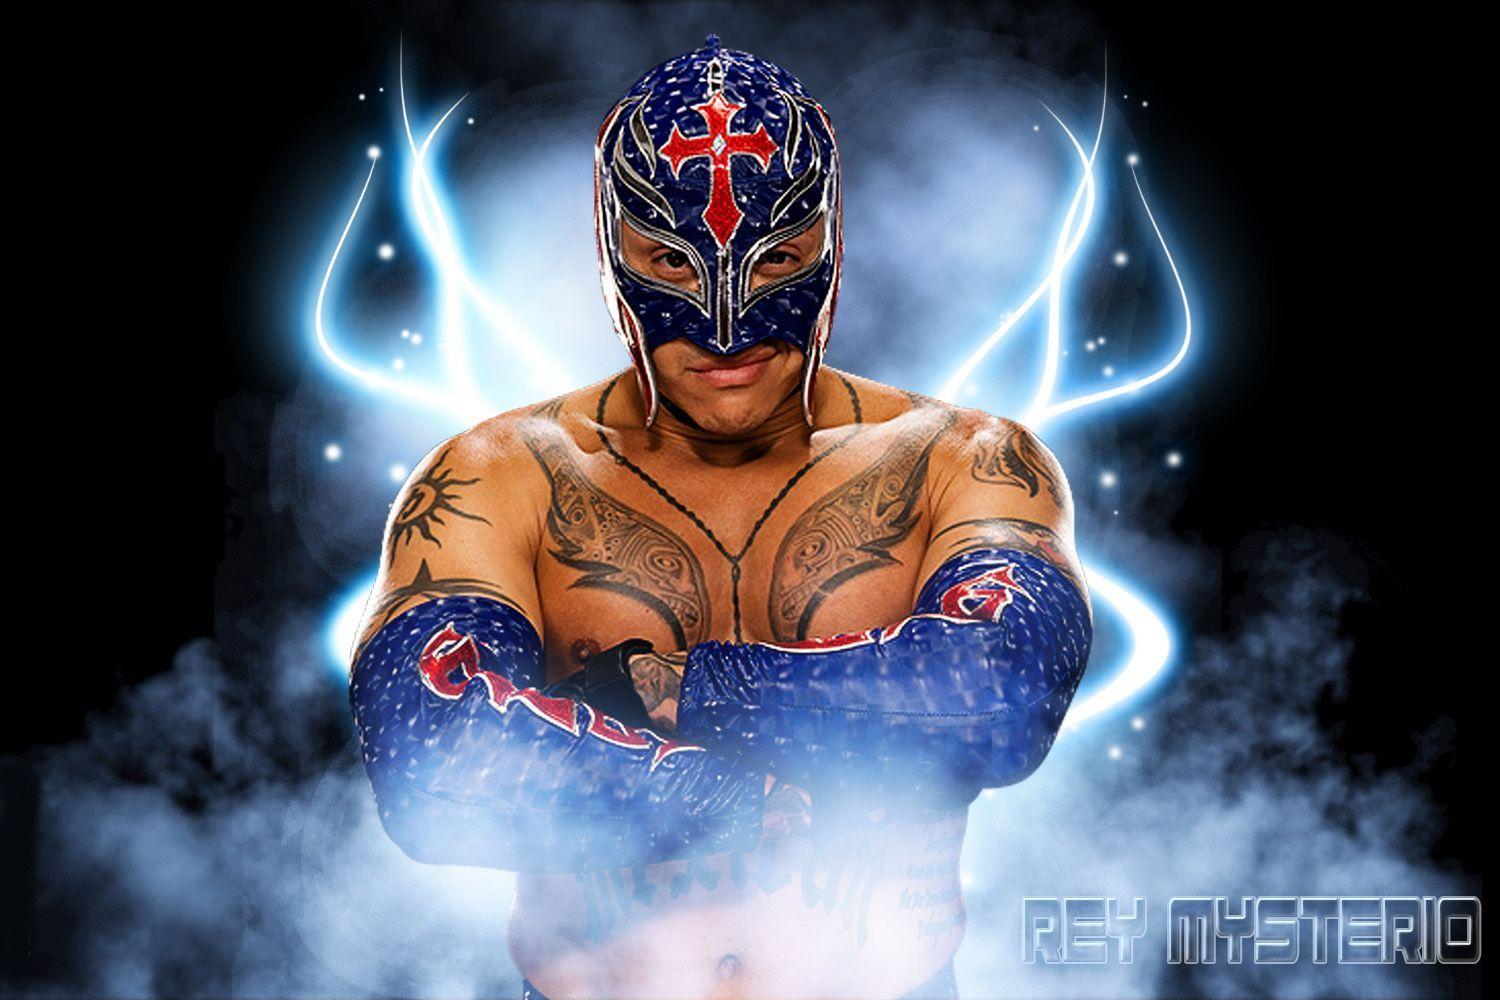 Rey Mysterio WWE Superstar New HD Wallpaper 2013. Latest HD